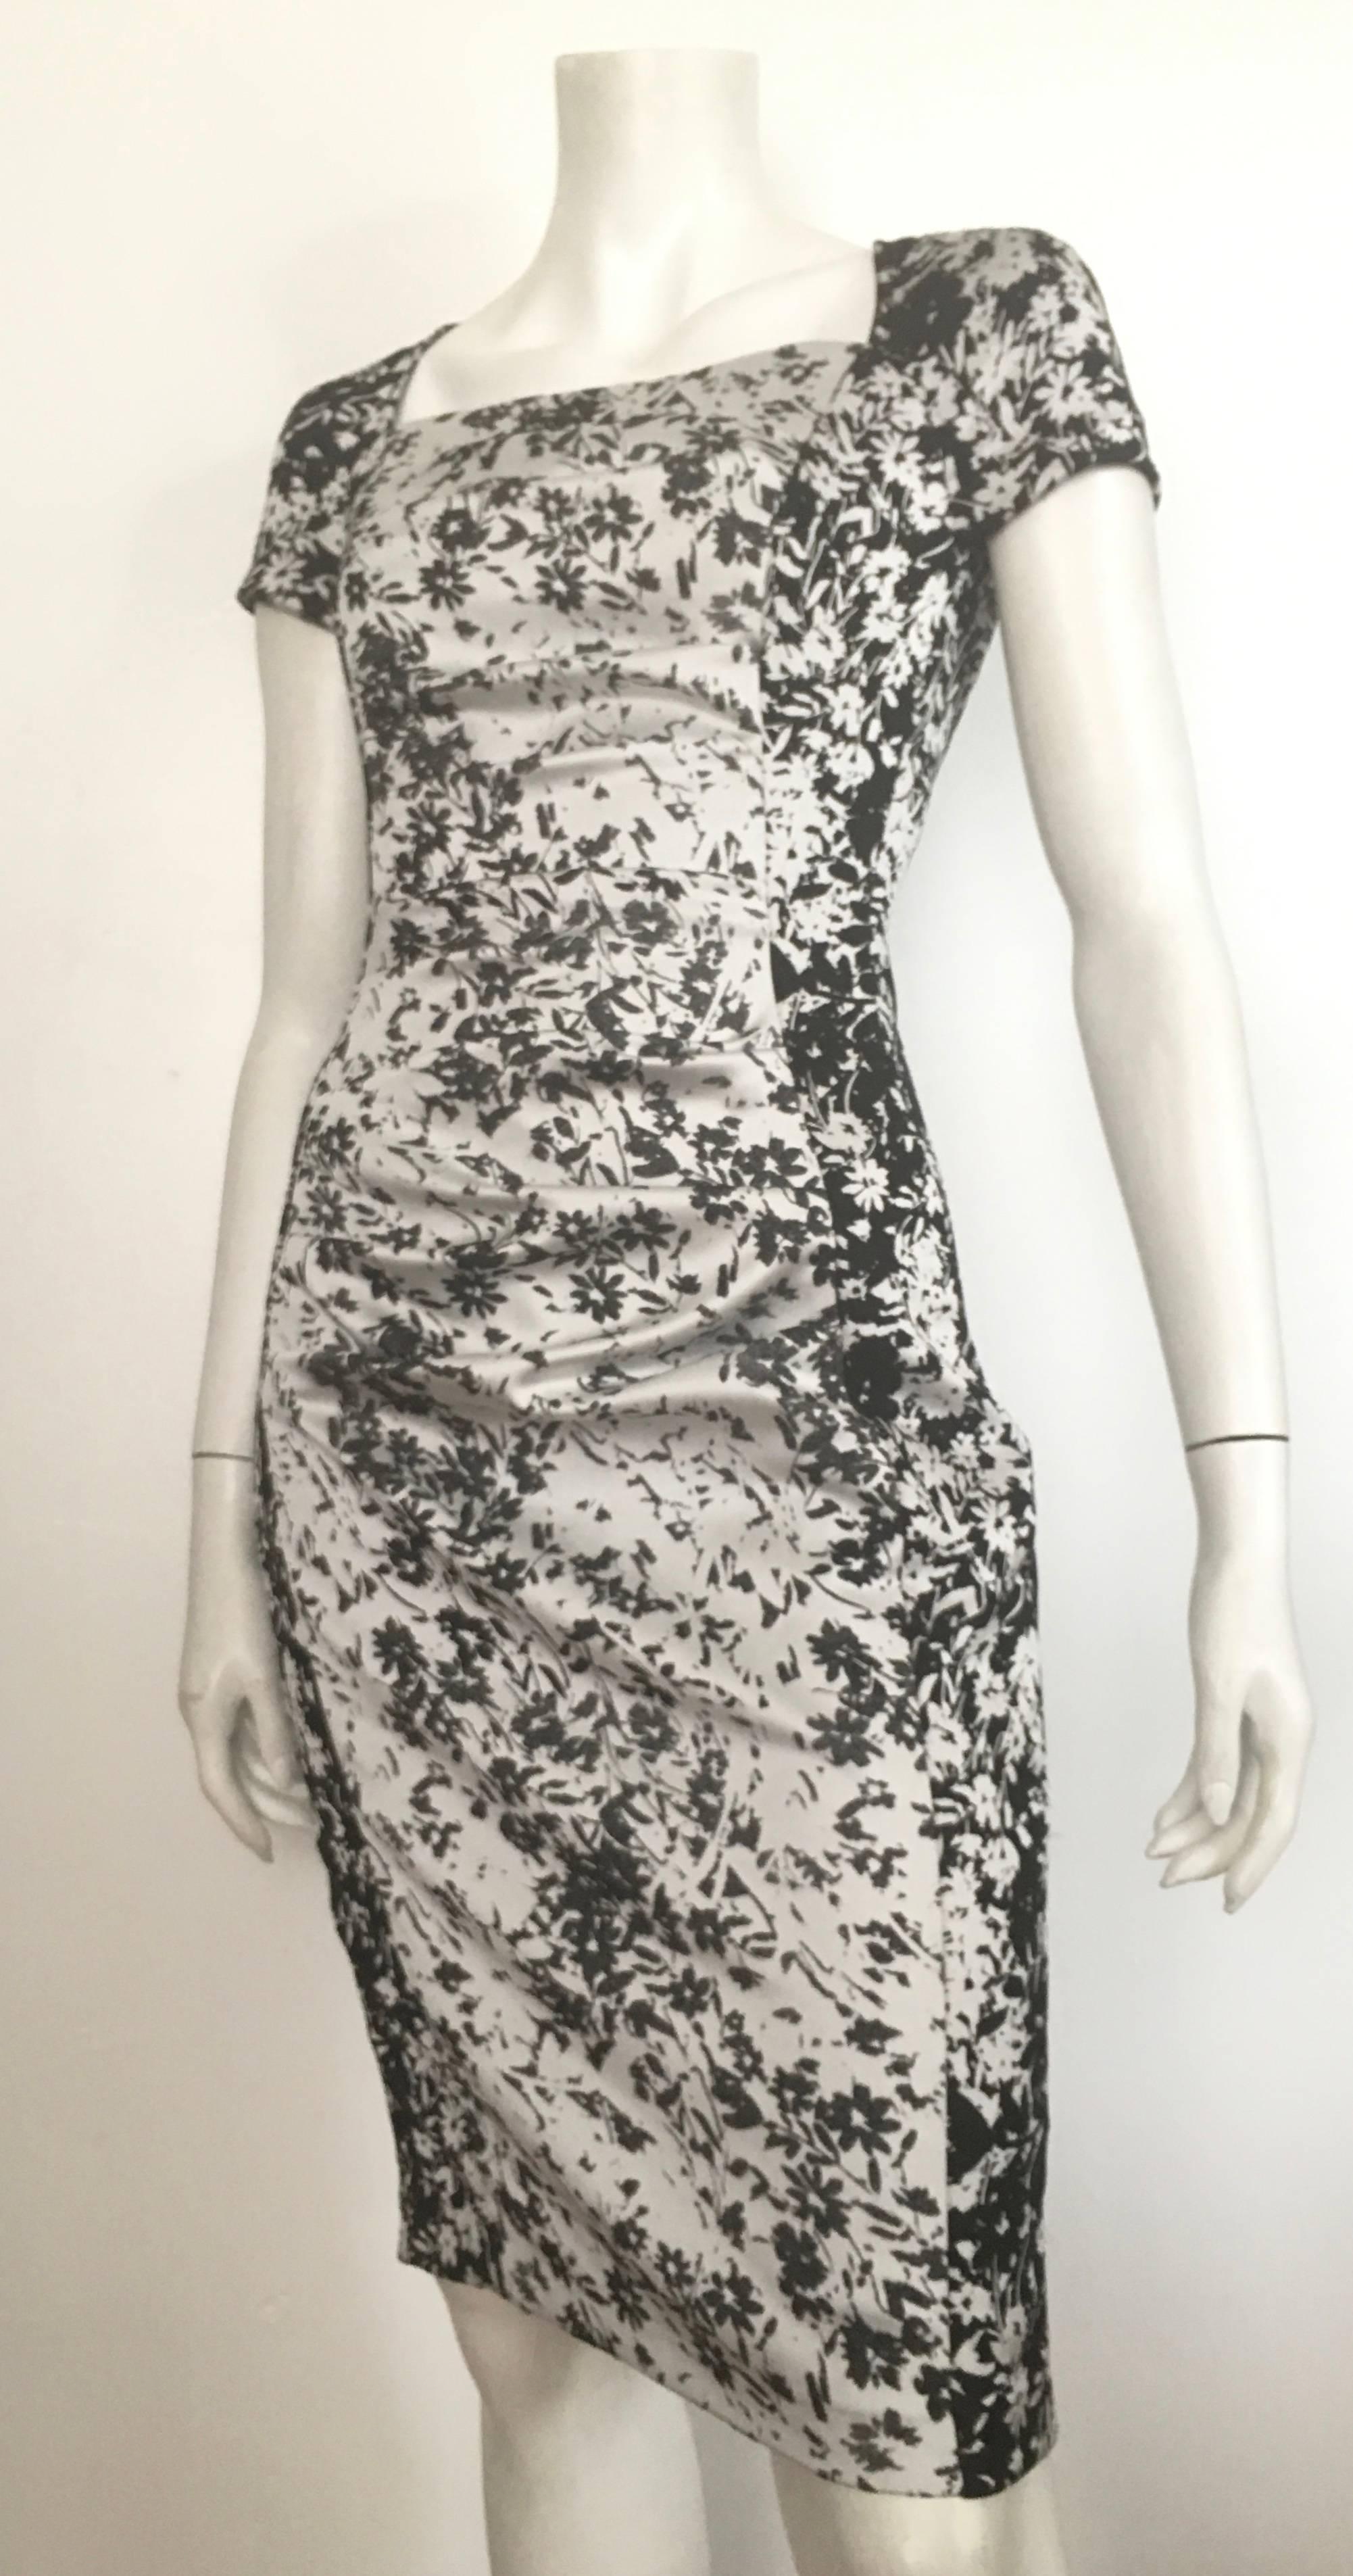 Talbot Runhof Pret Sheath Dress Size 6. For Sale 7